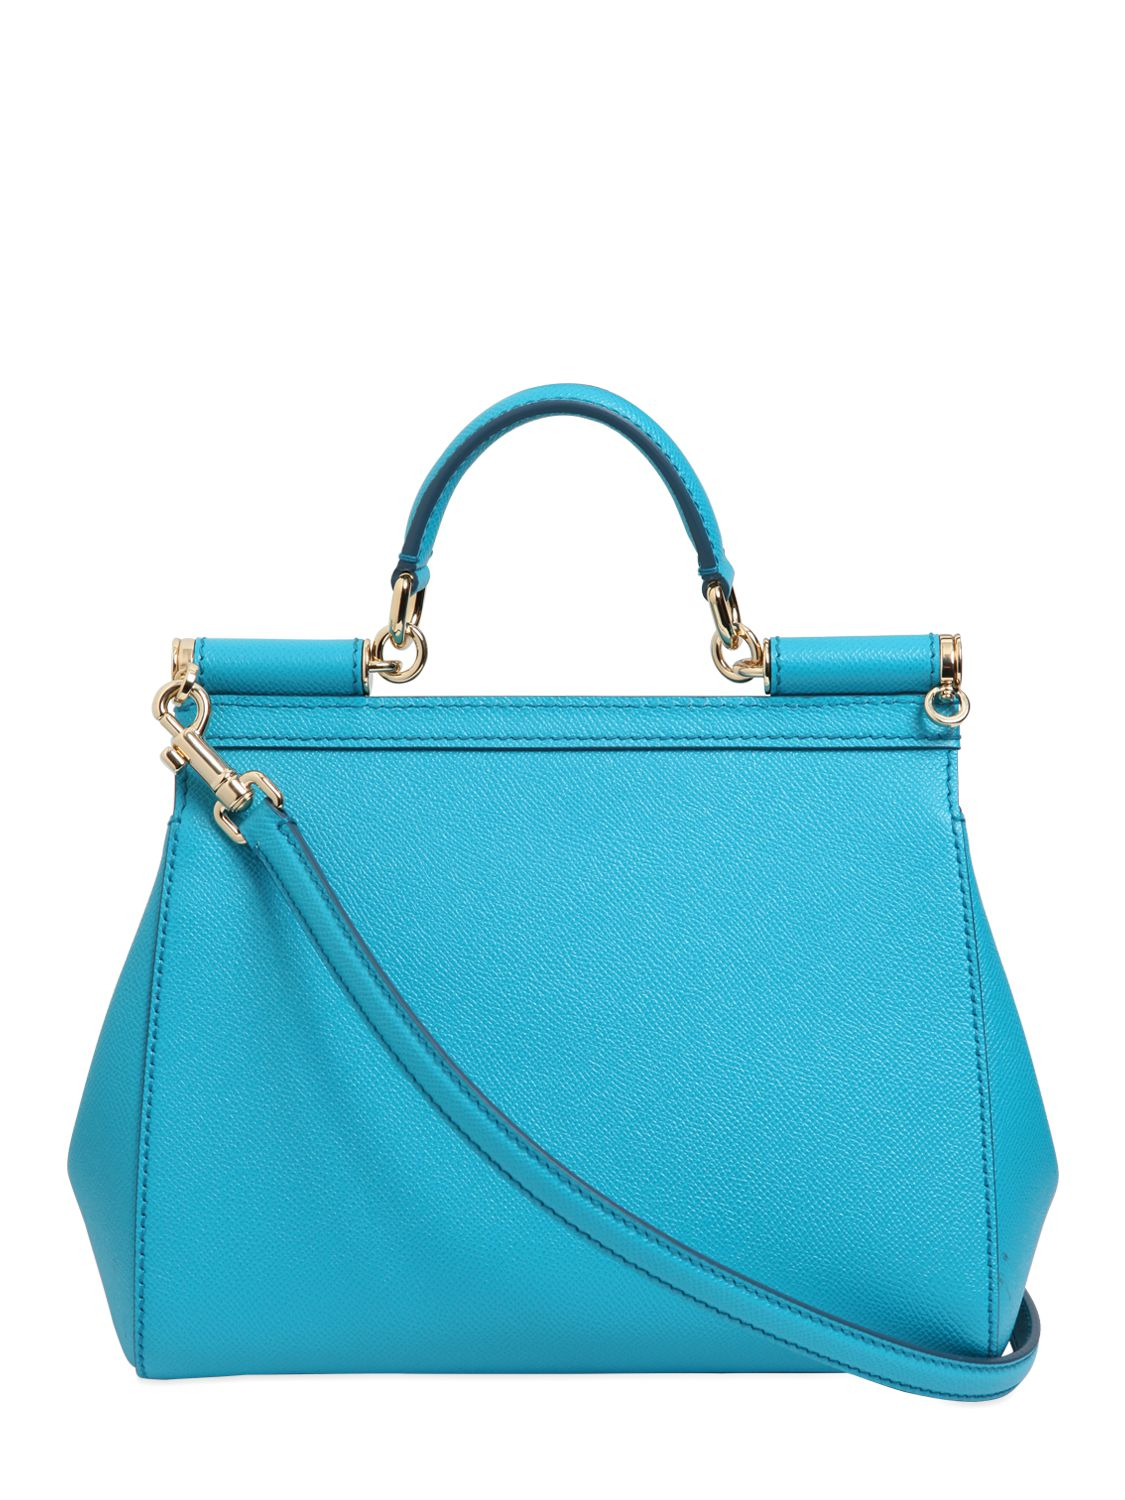 Lyst - Dolce & Gabbana Medium Sicily Dauphine Leather Bag in Blue